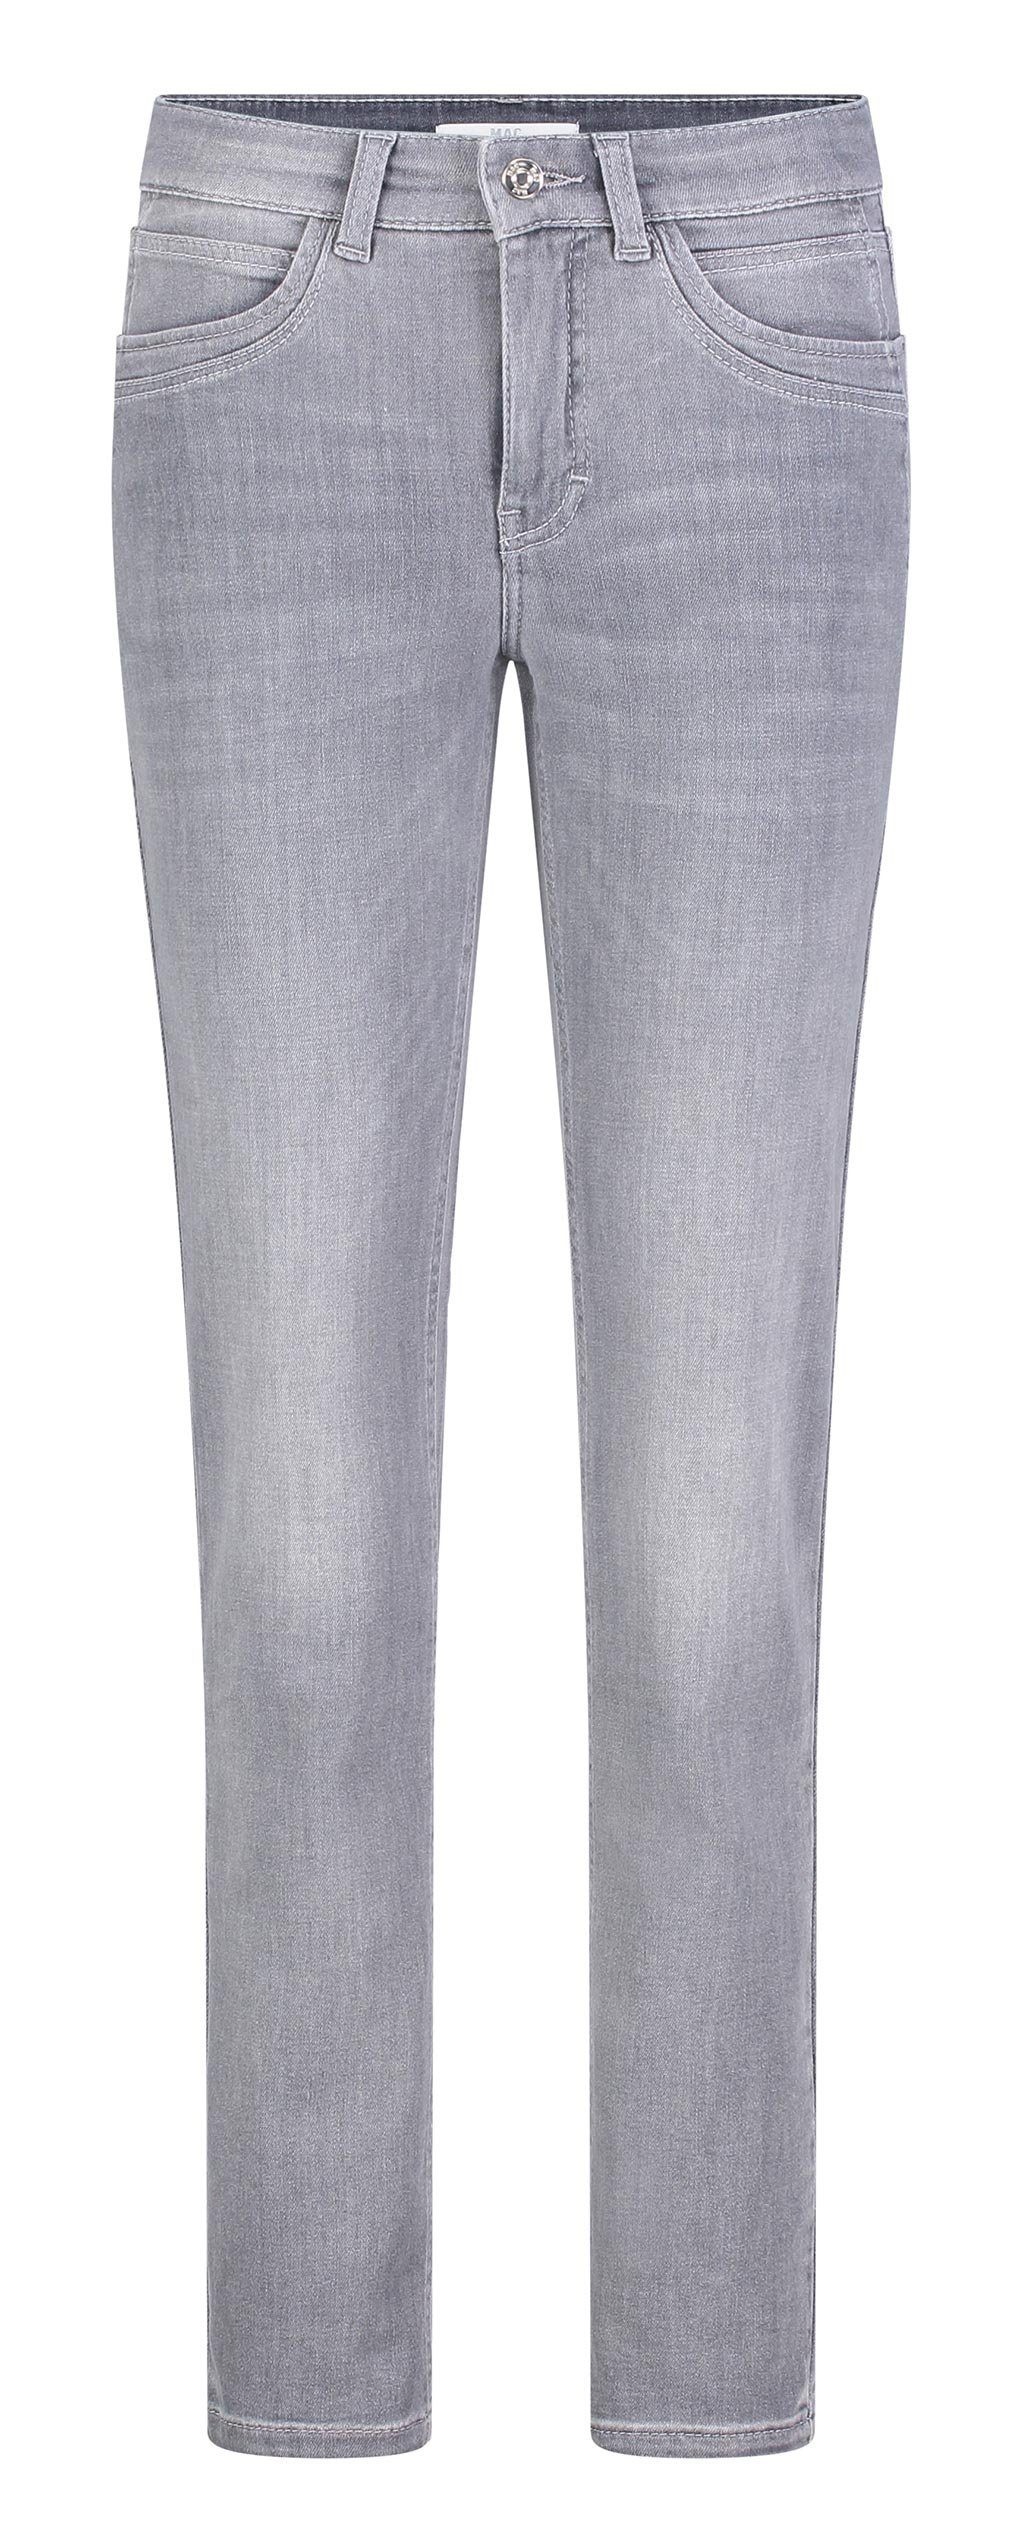 [Es ist seit dem Erscheinen des Verkaufs populär geworden] MAC Stretch-Jeans MAC random grey star ANGELA light 5268-90-0389L-D374